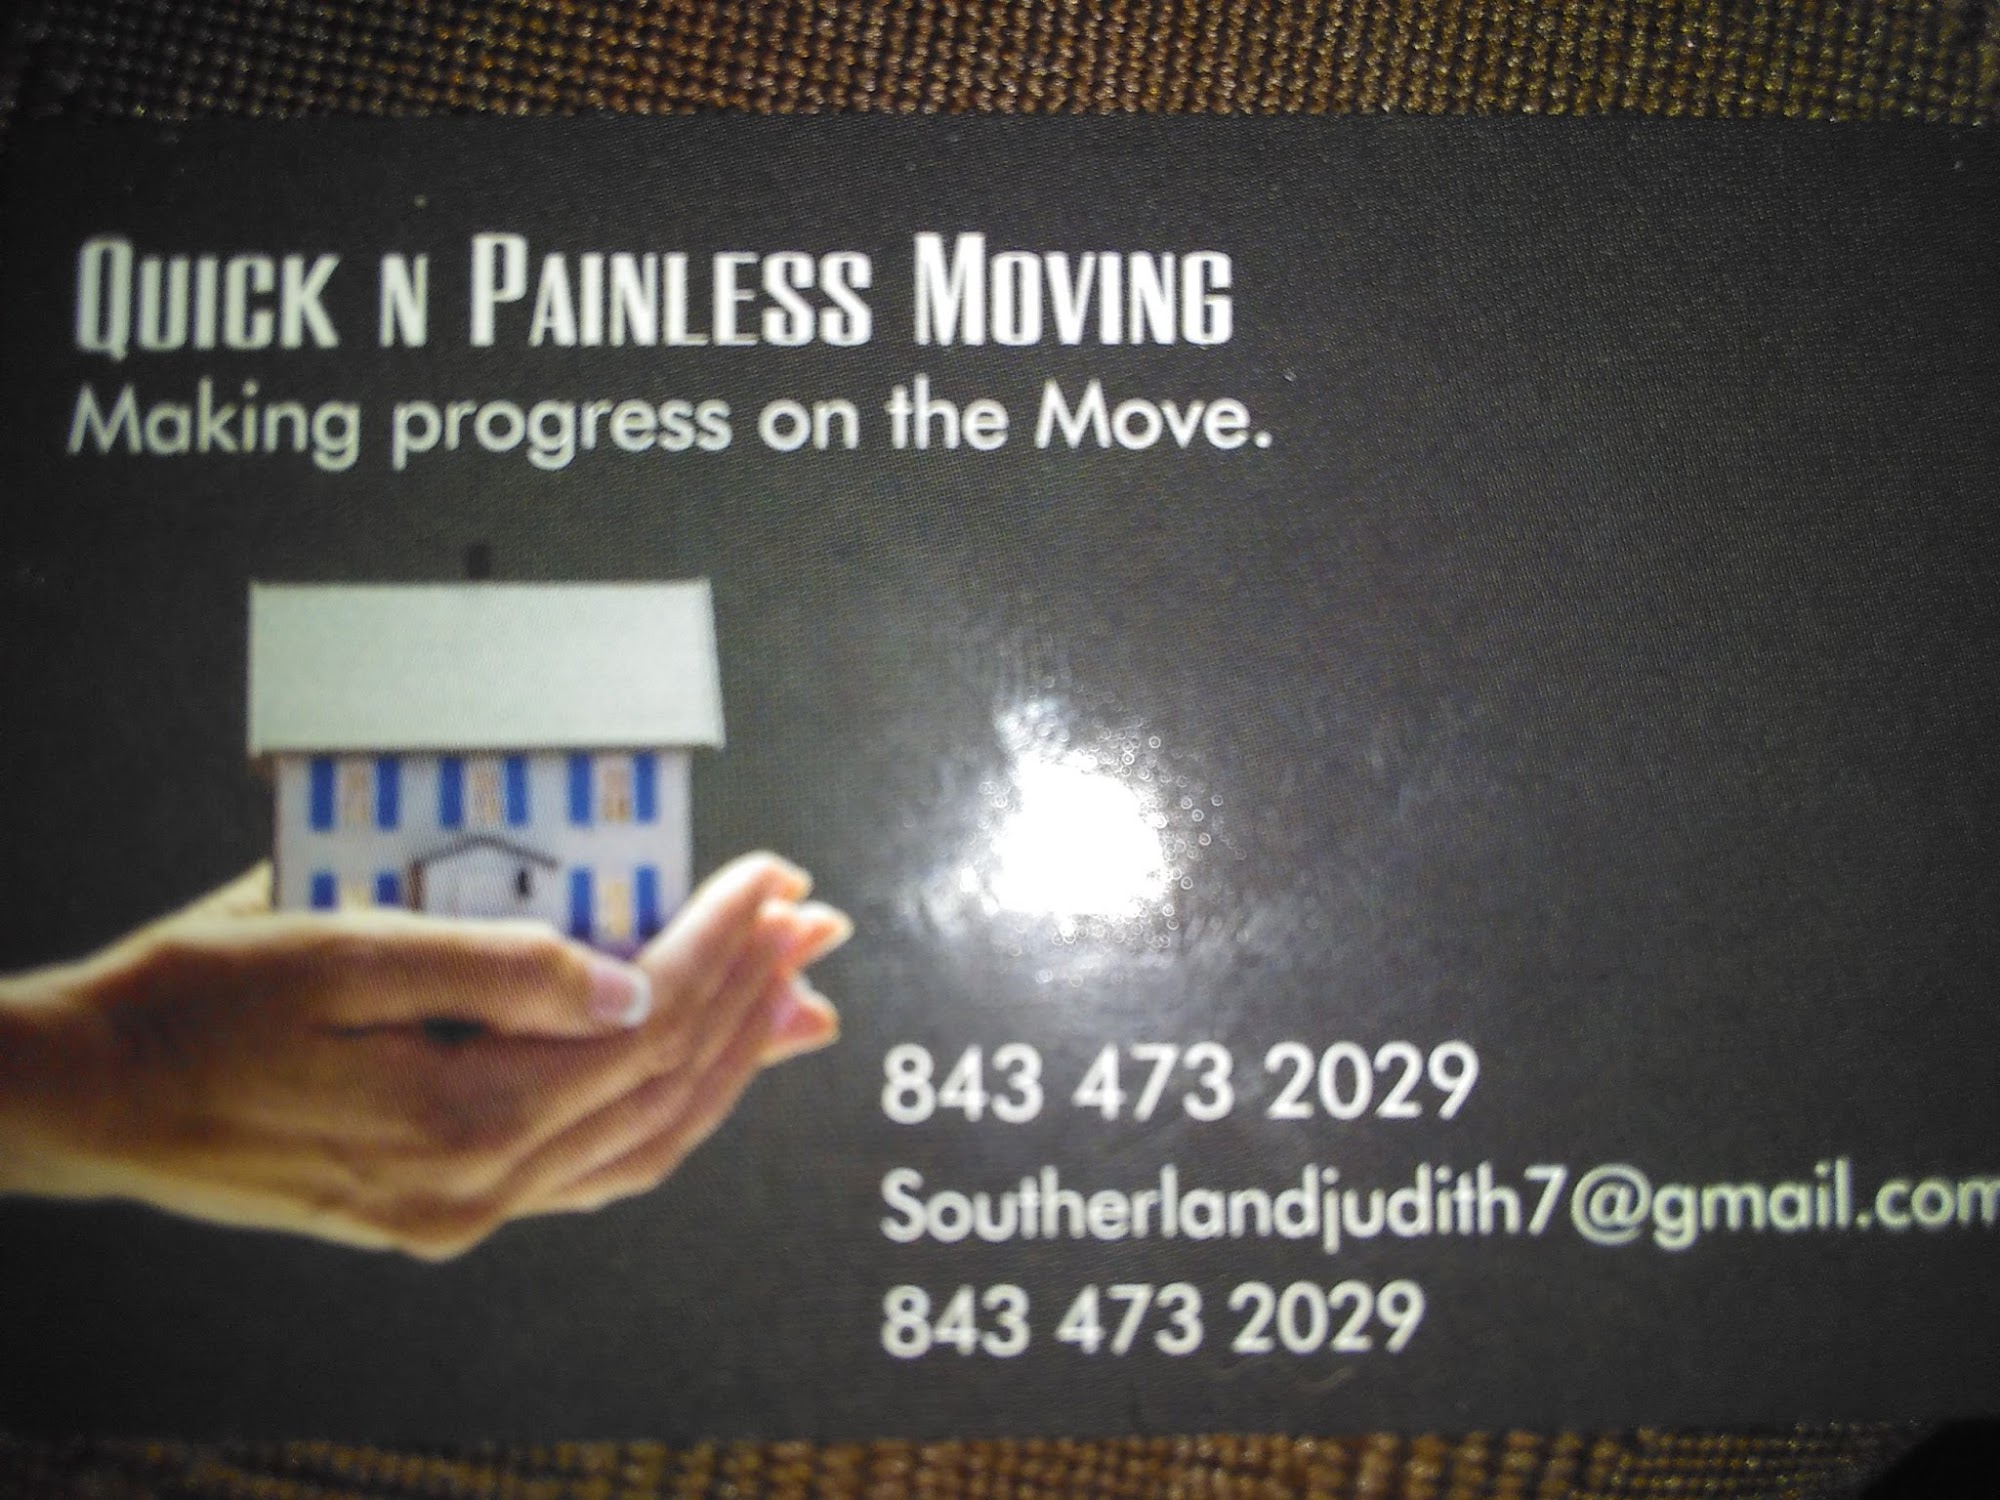 Quick N Painless Moving,LLC & Logistics.Com